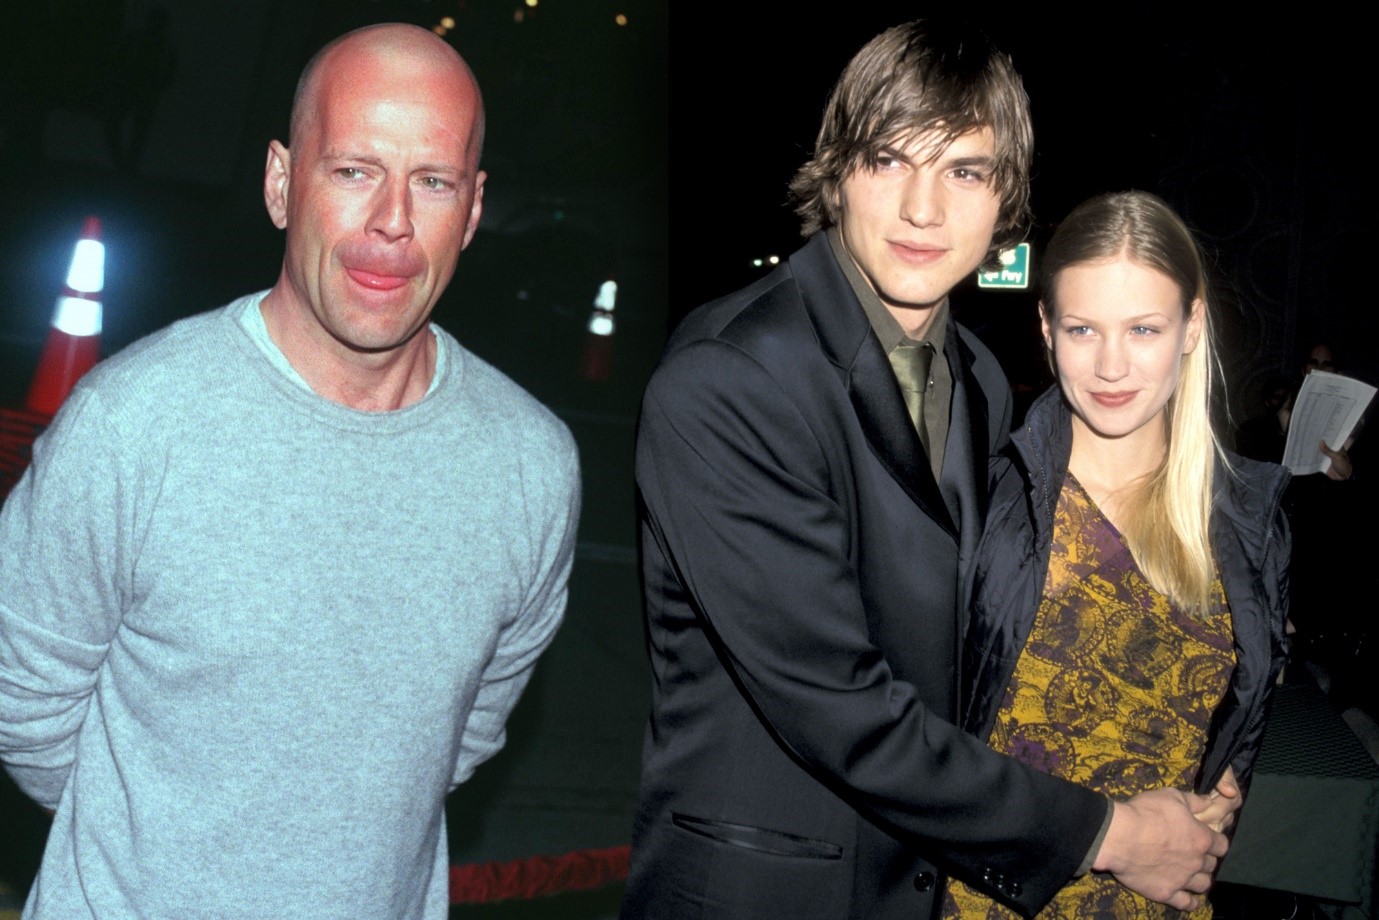 January Jones Boyfriend: With Ashton Kutcher and Bruce Willis.